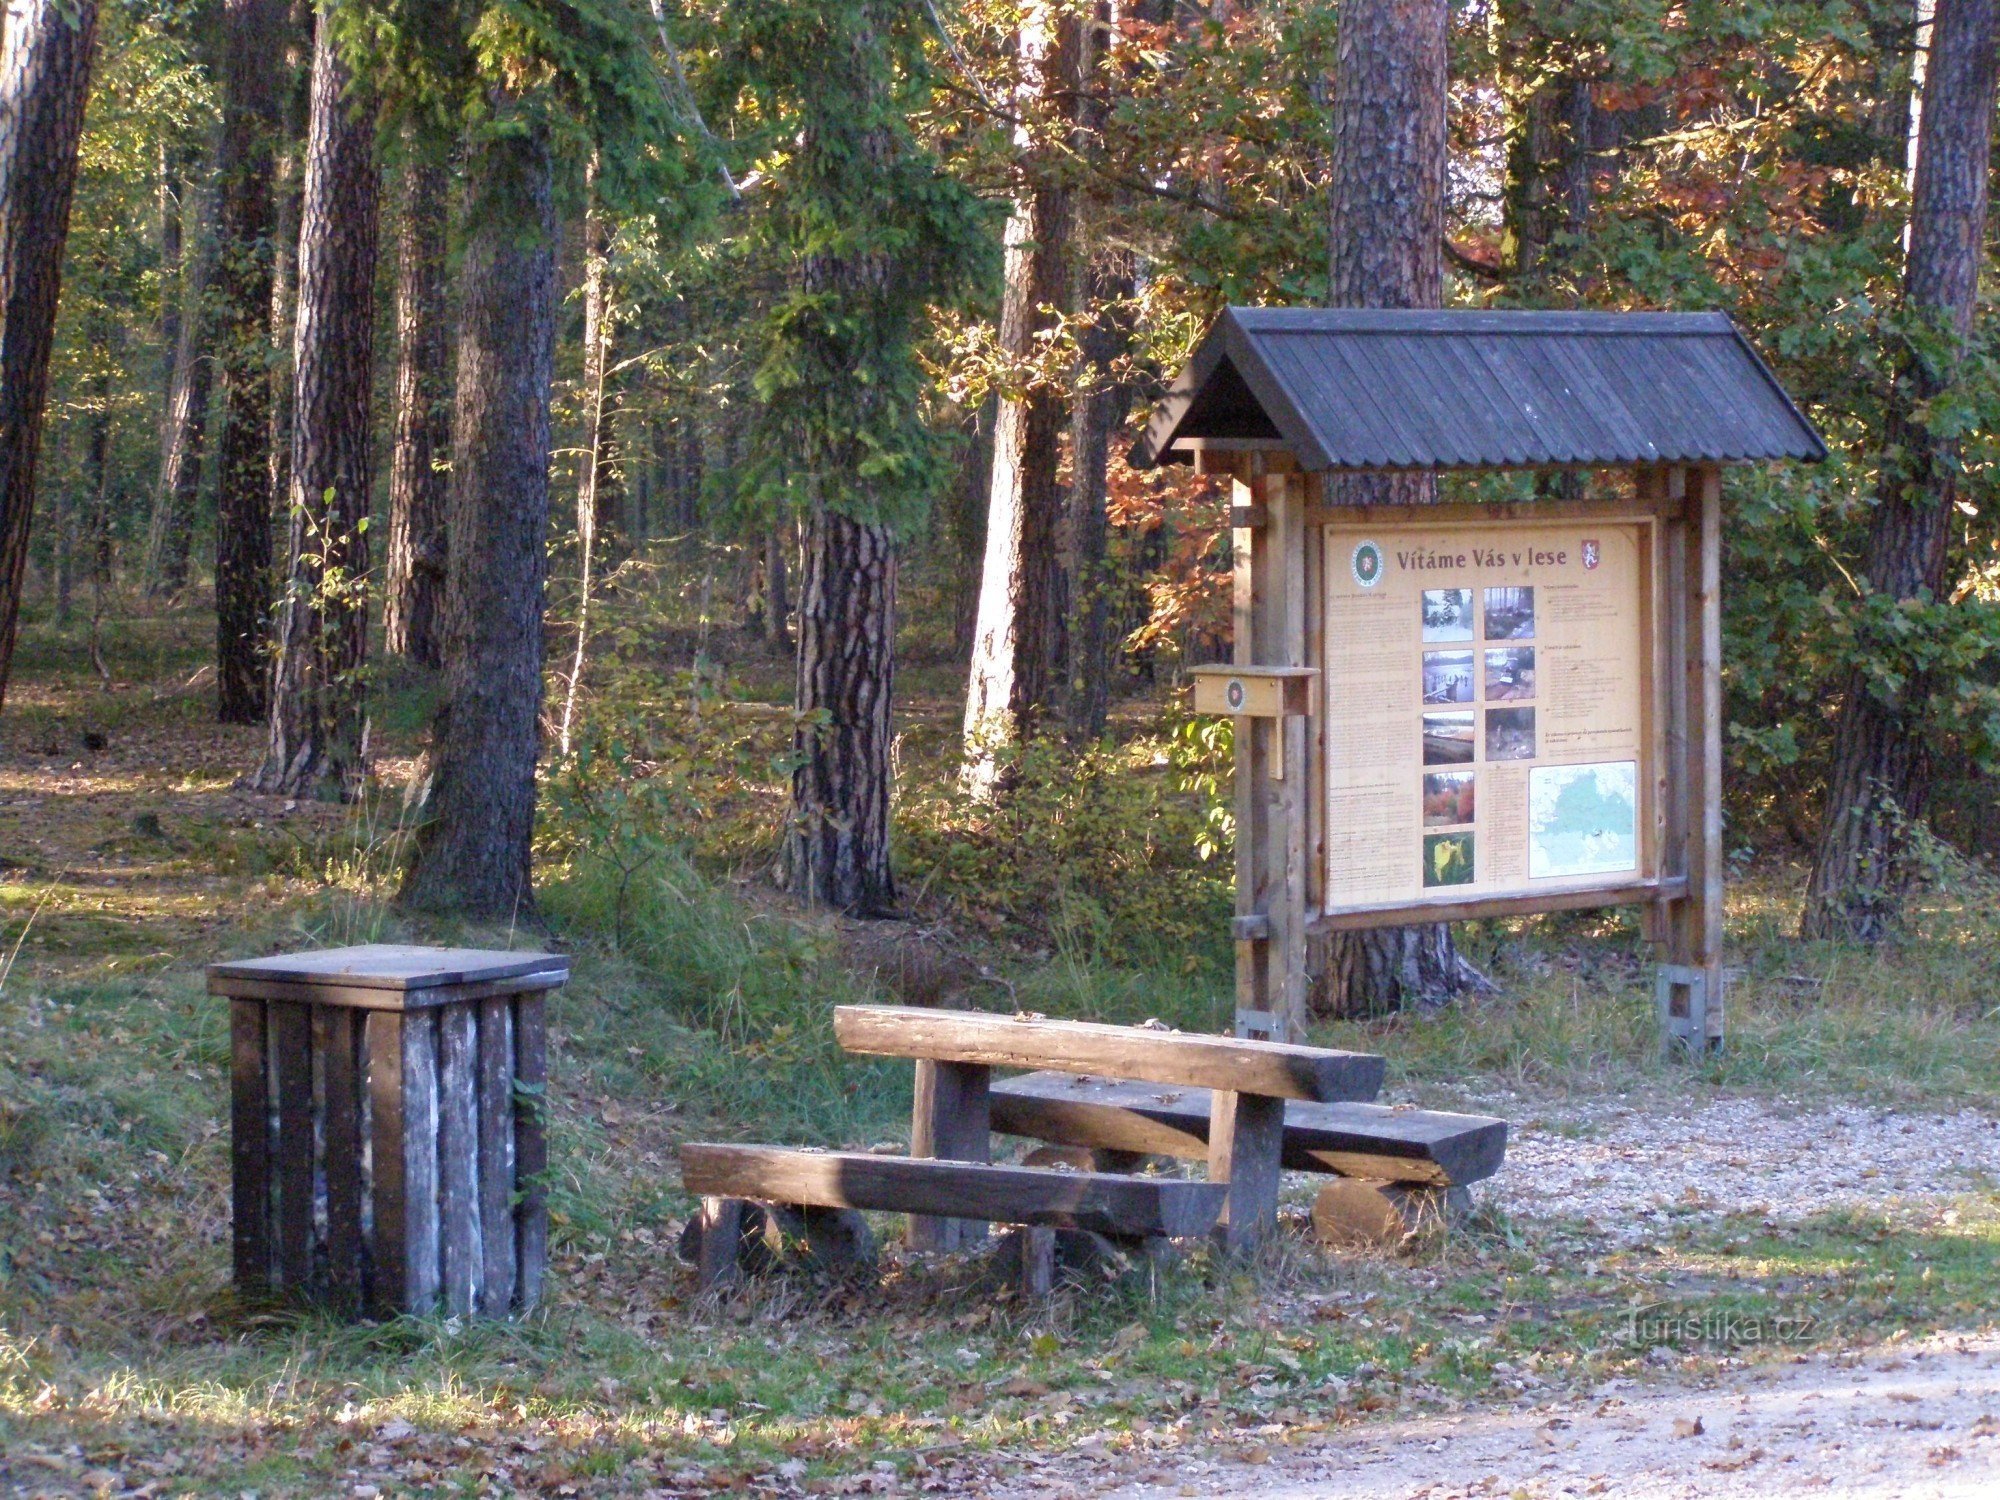 Bažantnice の交差点 - Hradecké lesy